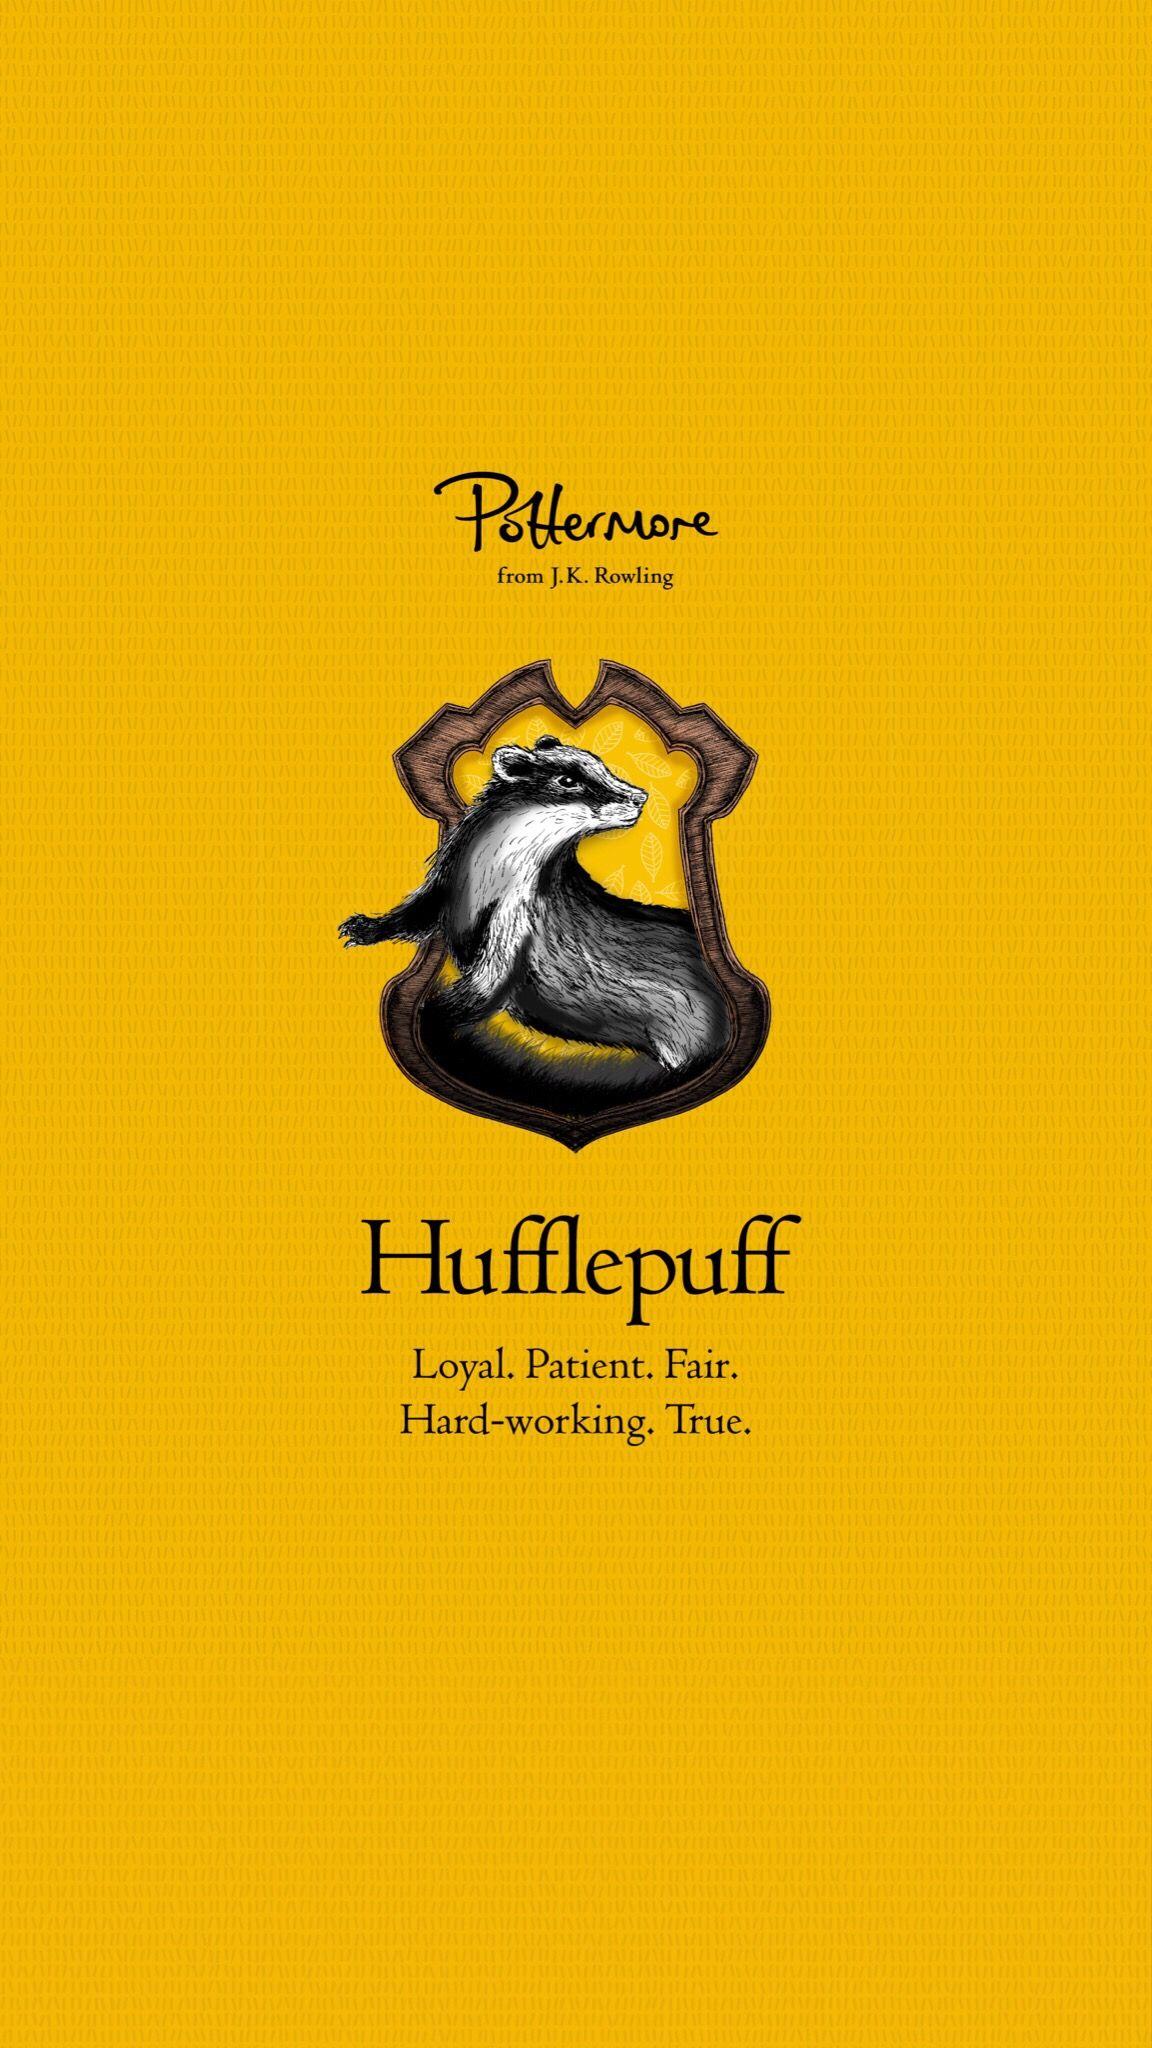 iPhone Hufflepuff Pottermore Wallpaper. Harry potter